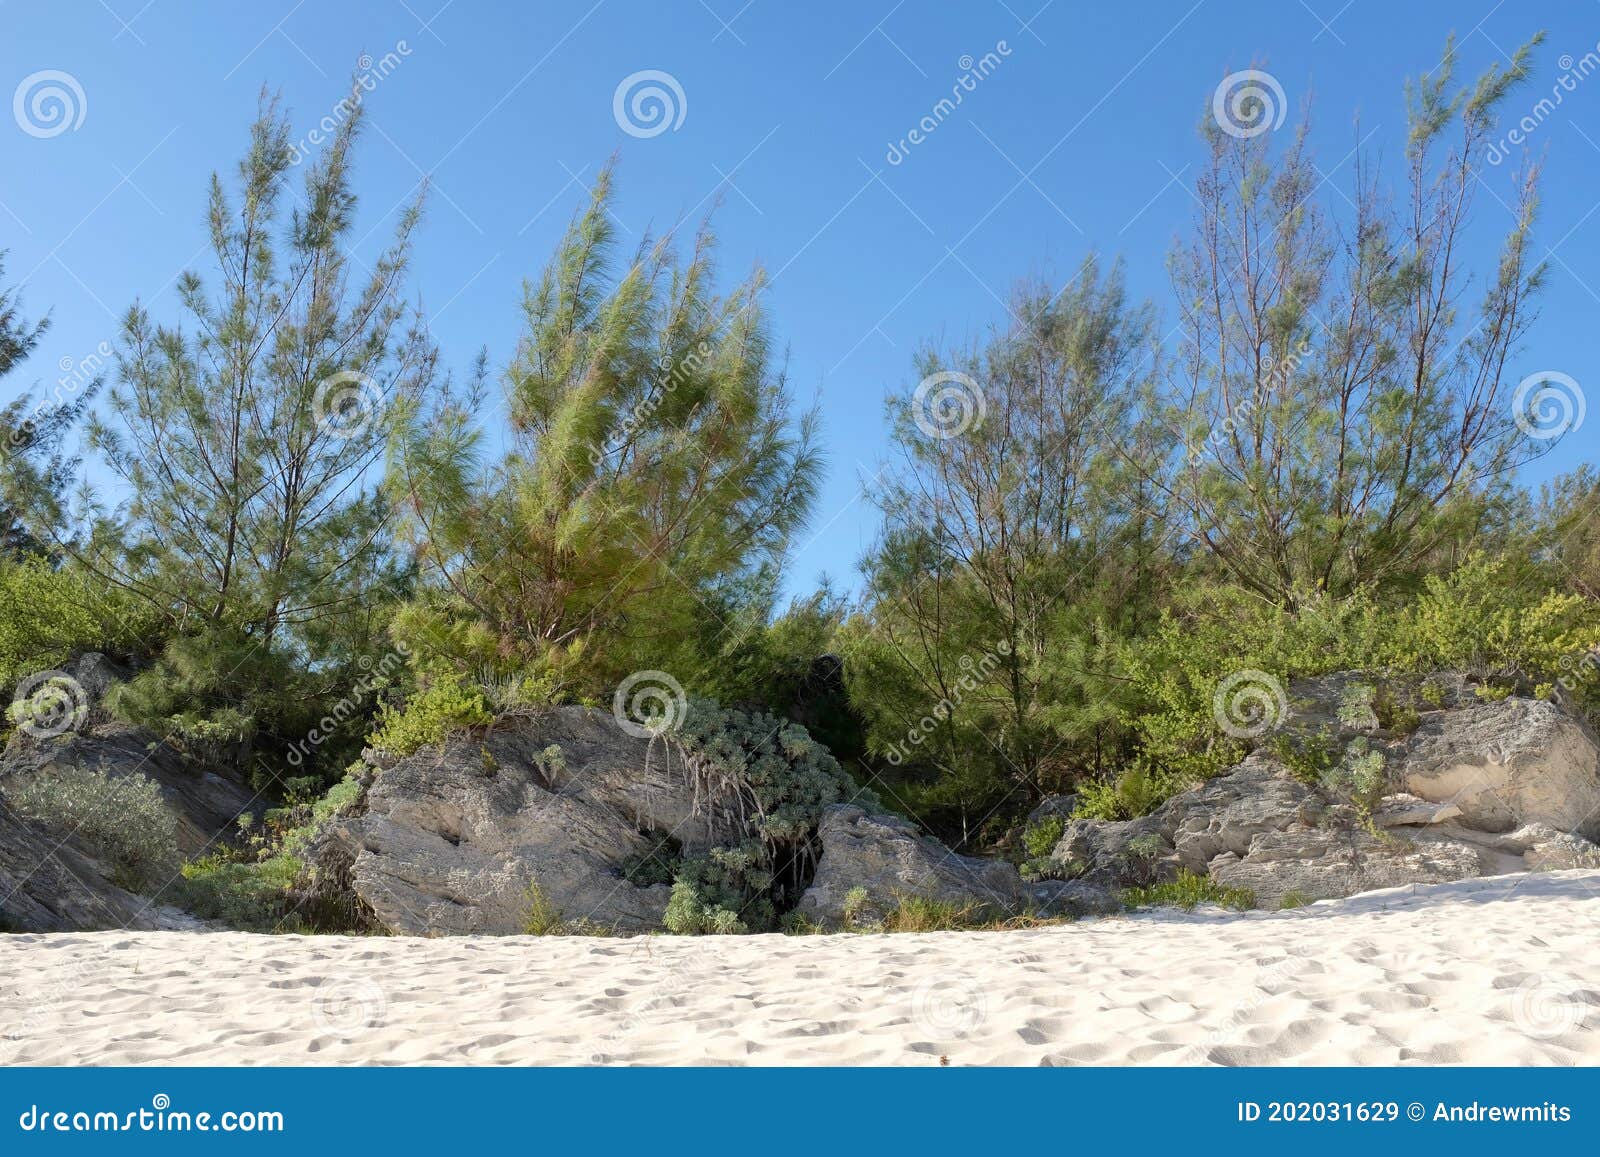 Sandy Shrubs On Back Beach Dune Royalty-Free Stock Image ...